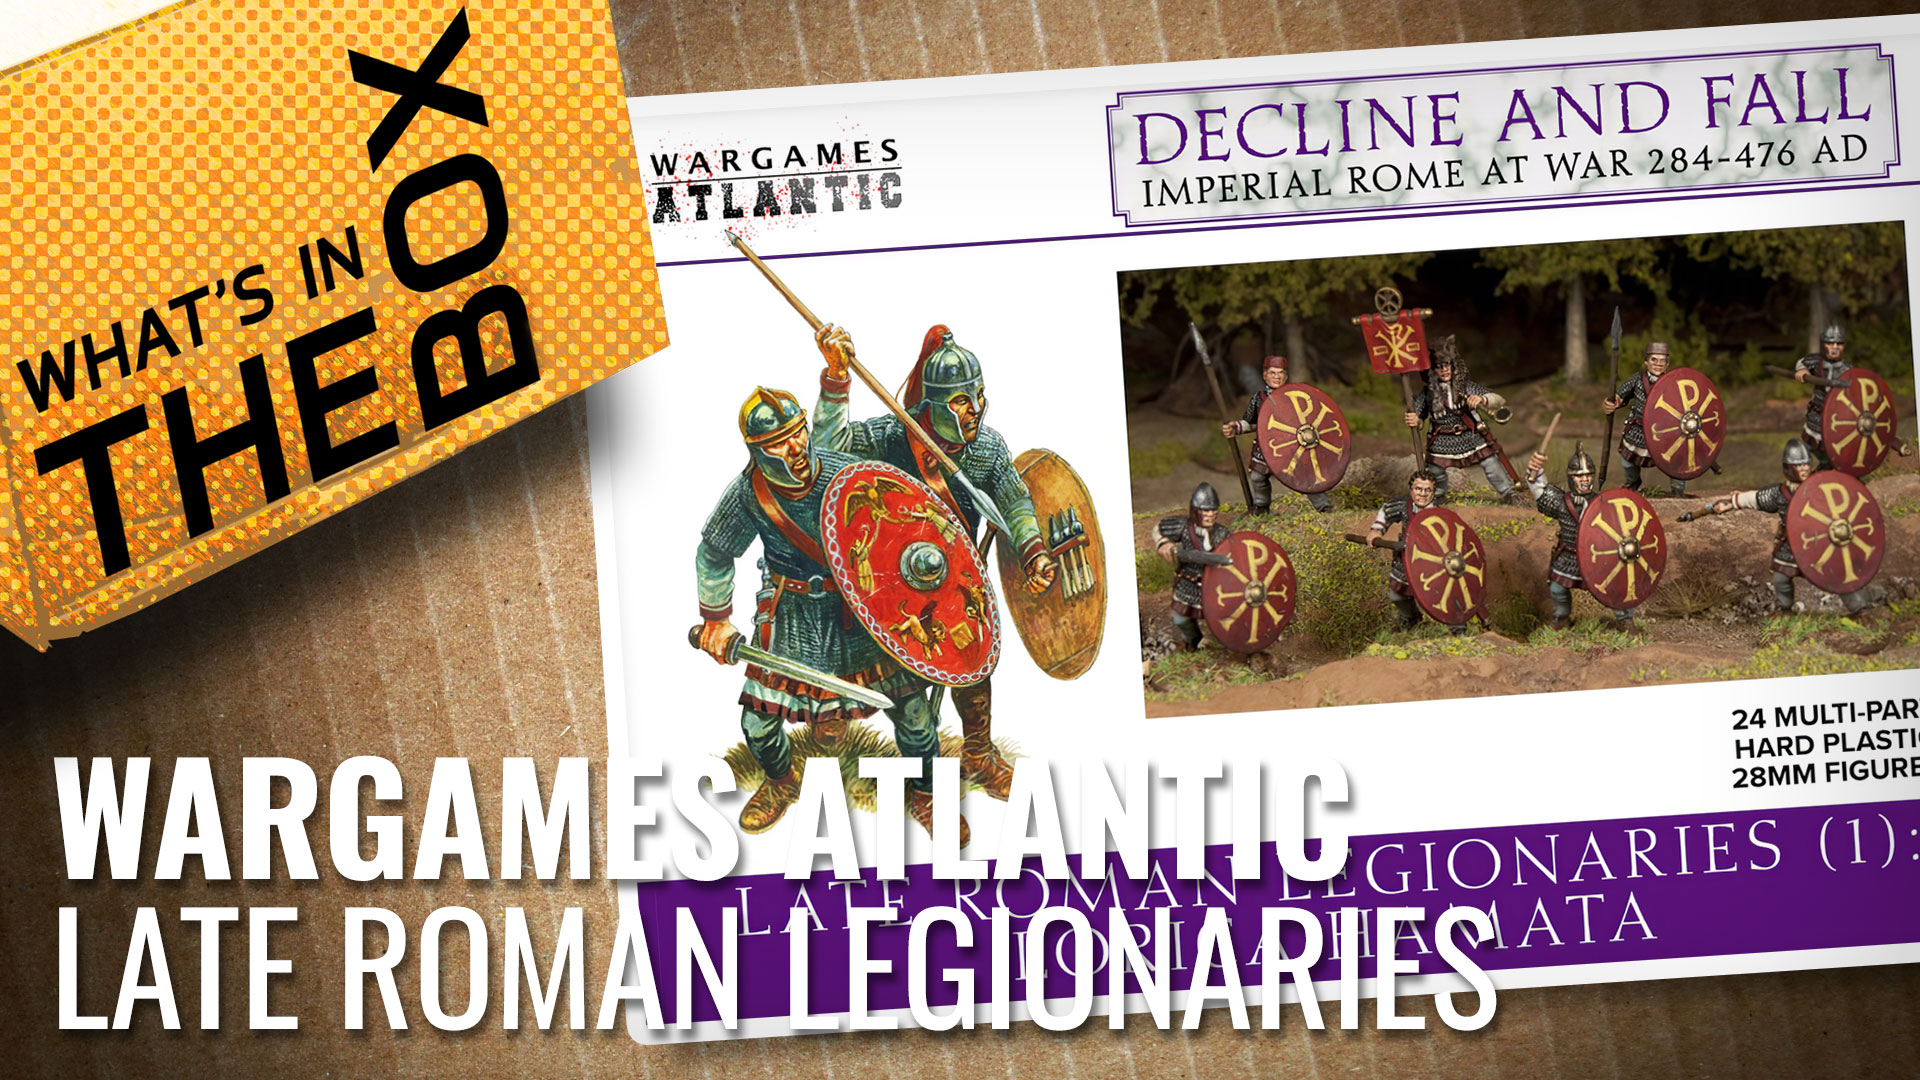 Unboxing---Wargames-Atlantic-Late-Roman-Legionaires-coverimage-V2